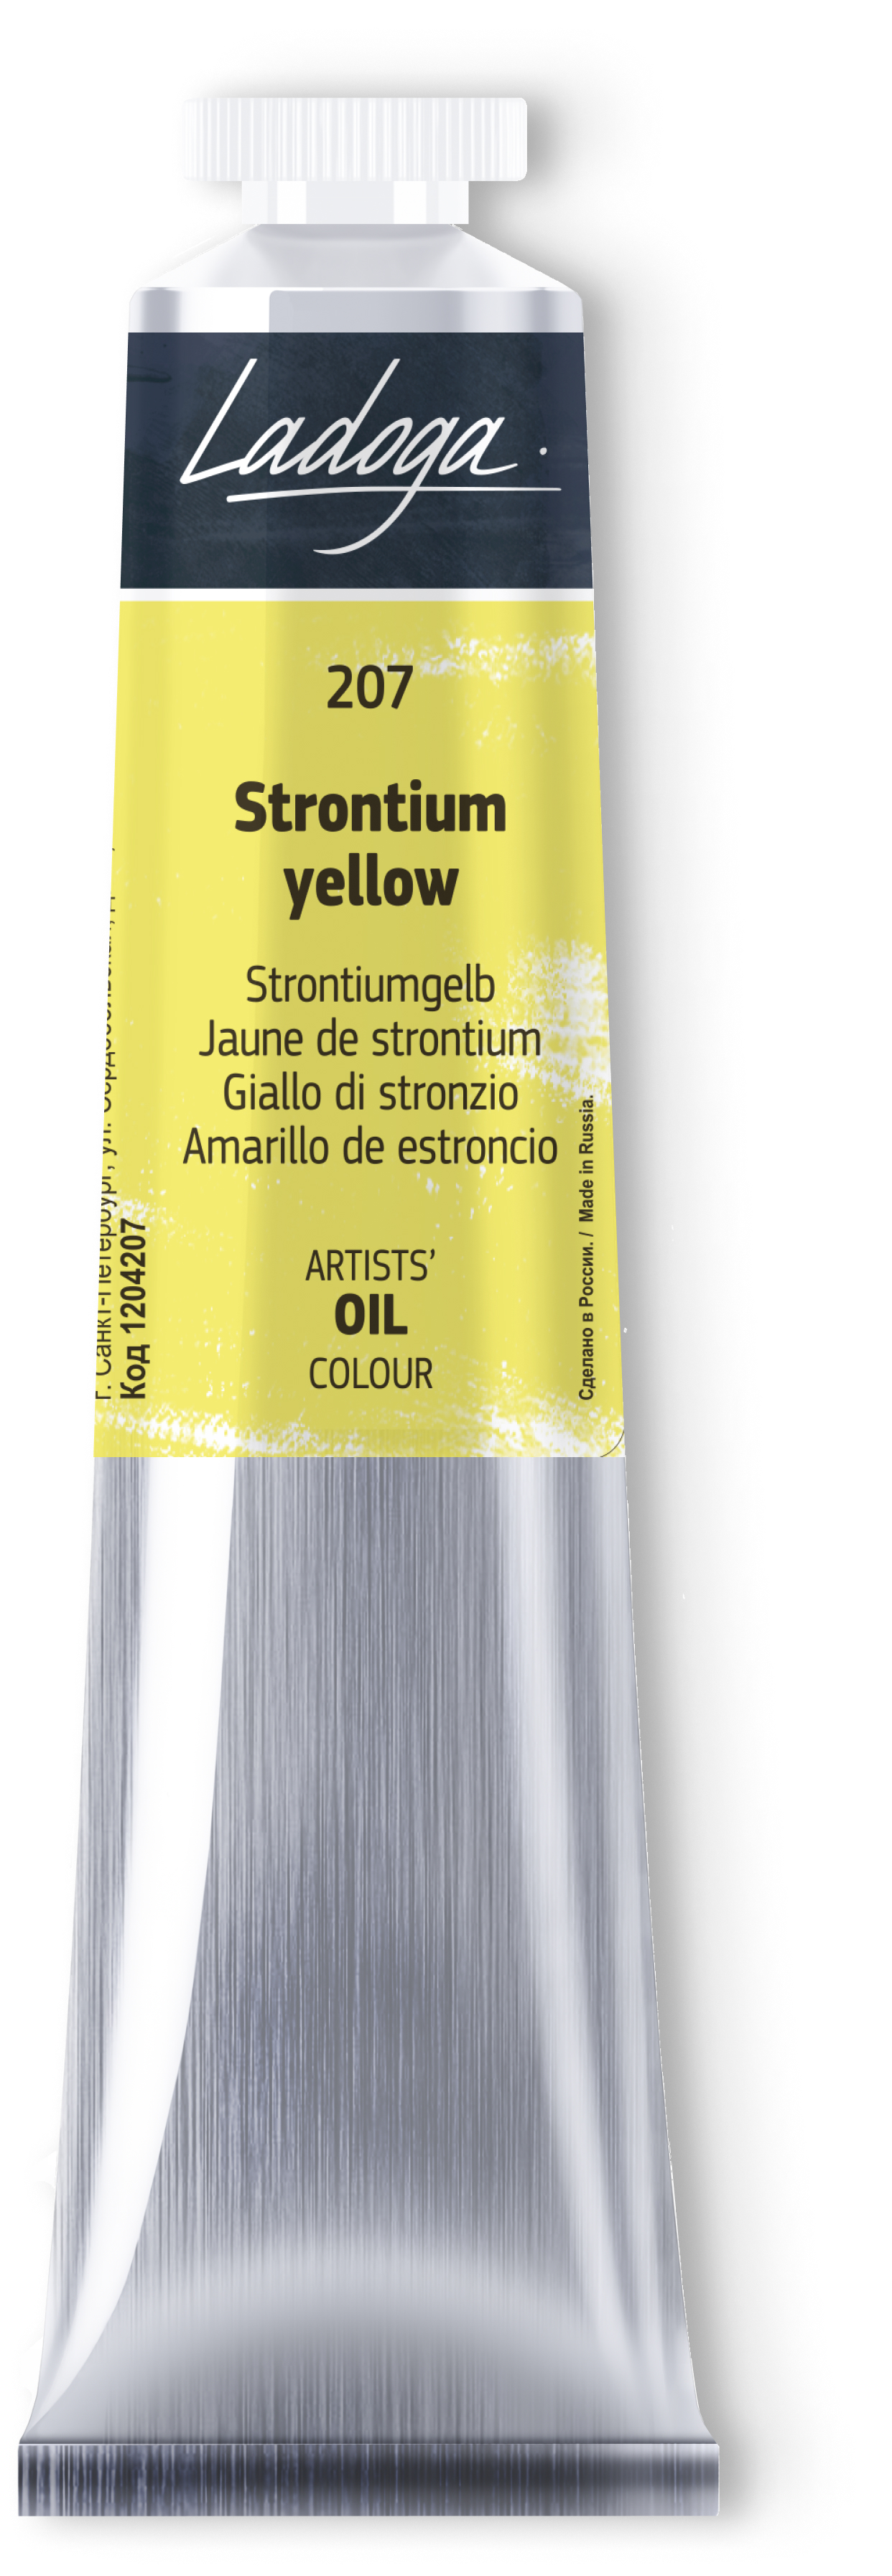 Oil colour "Ladoga", Strontium yellow, tube, № 207